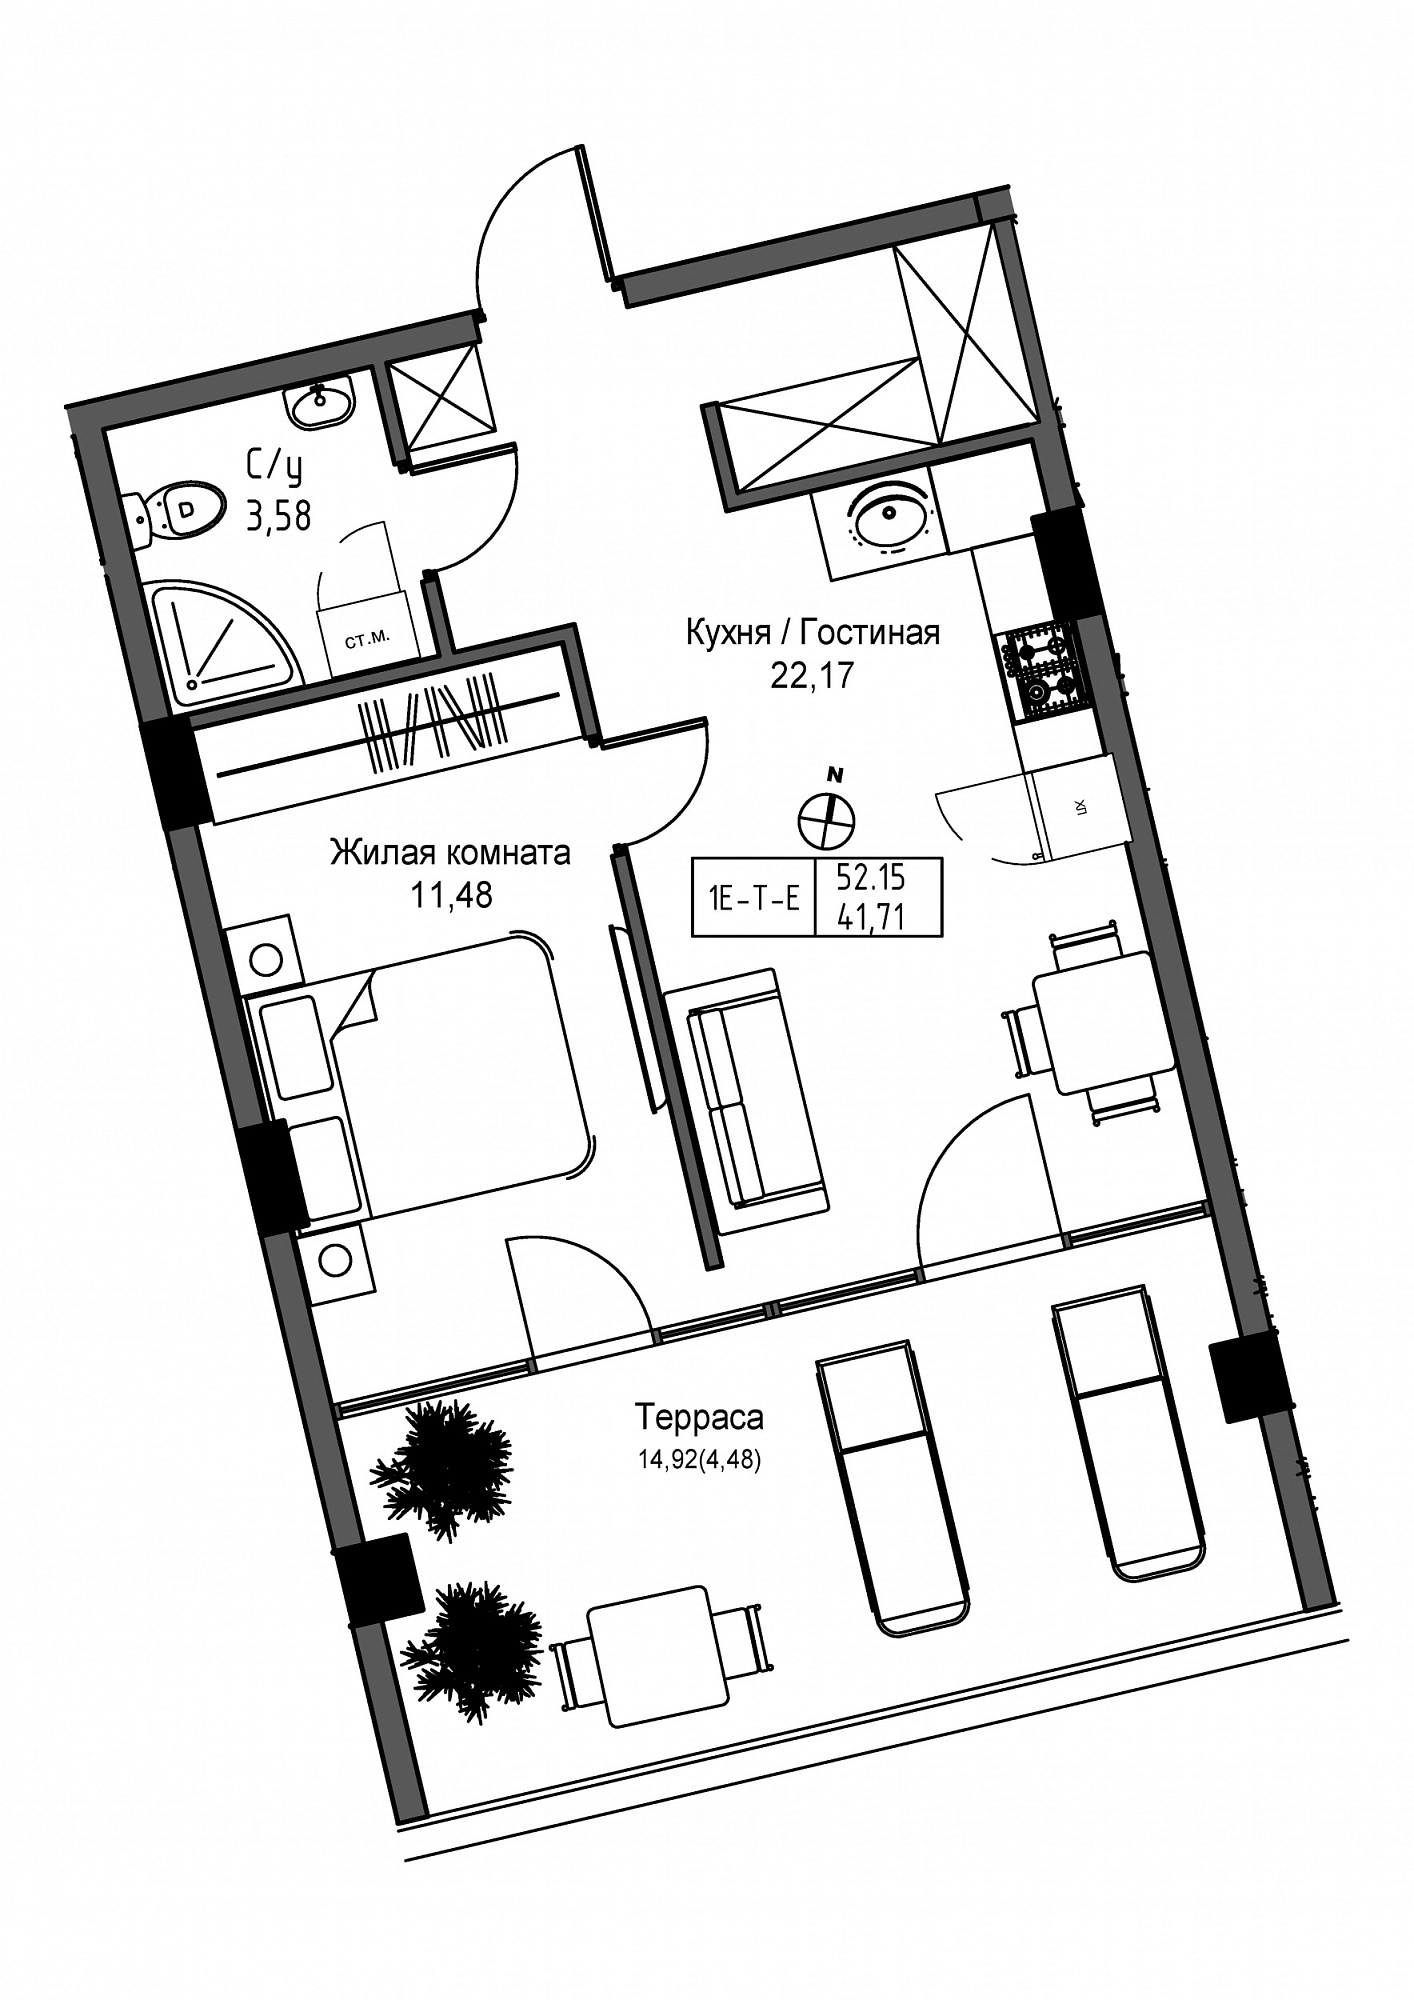 Planning 1-rm flats area 41.71m2, UM-004-03/0008.